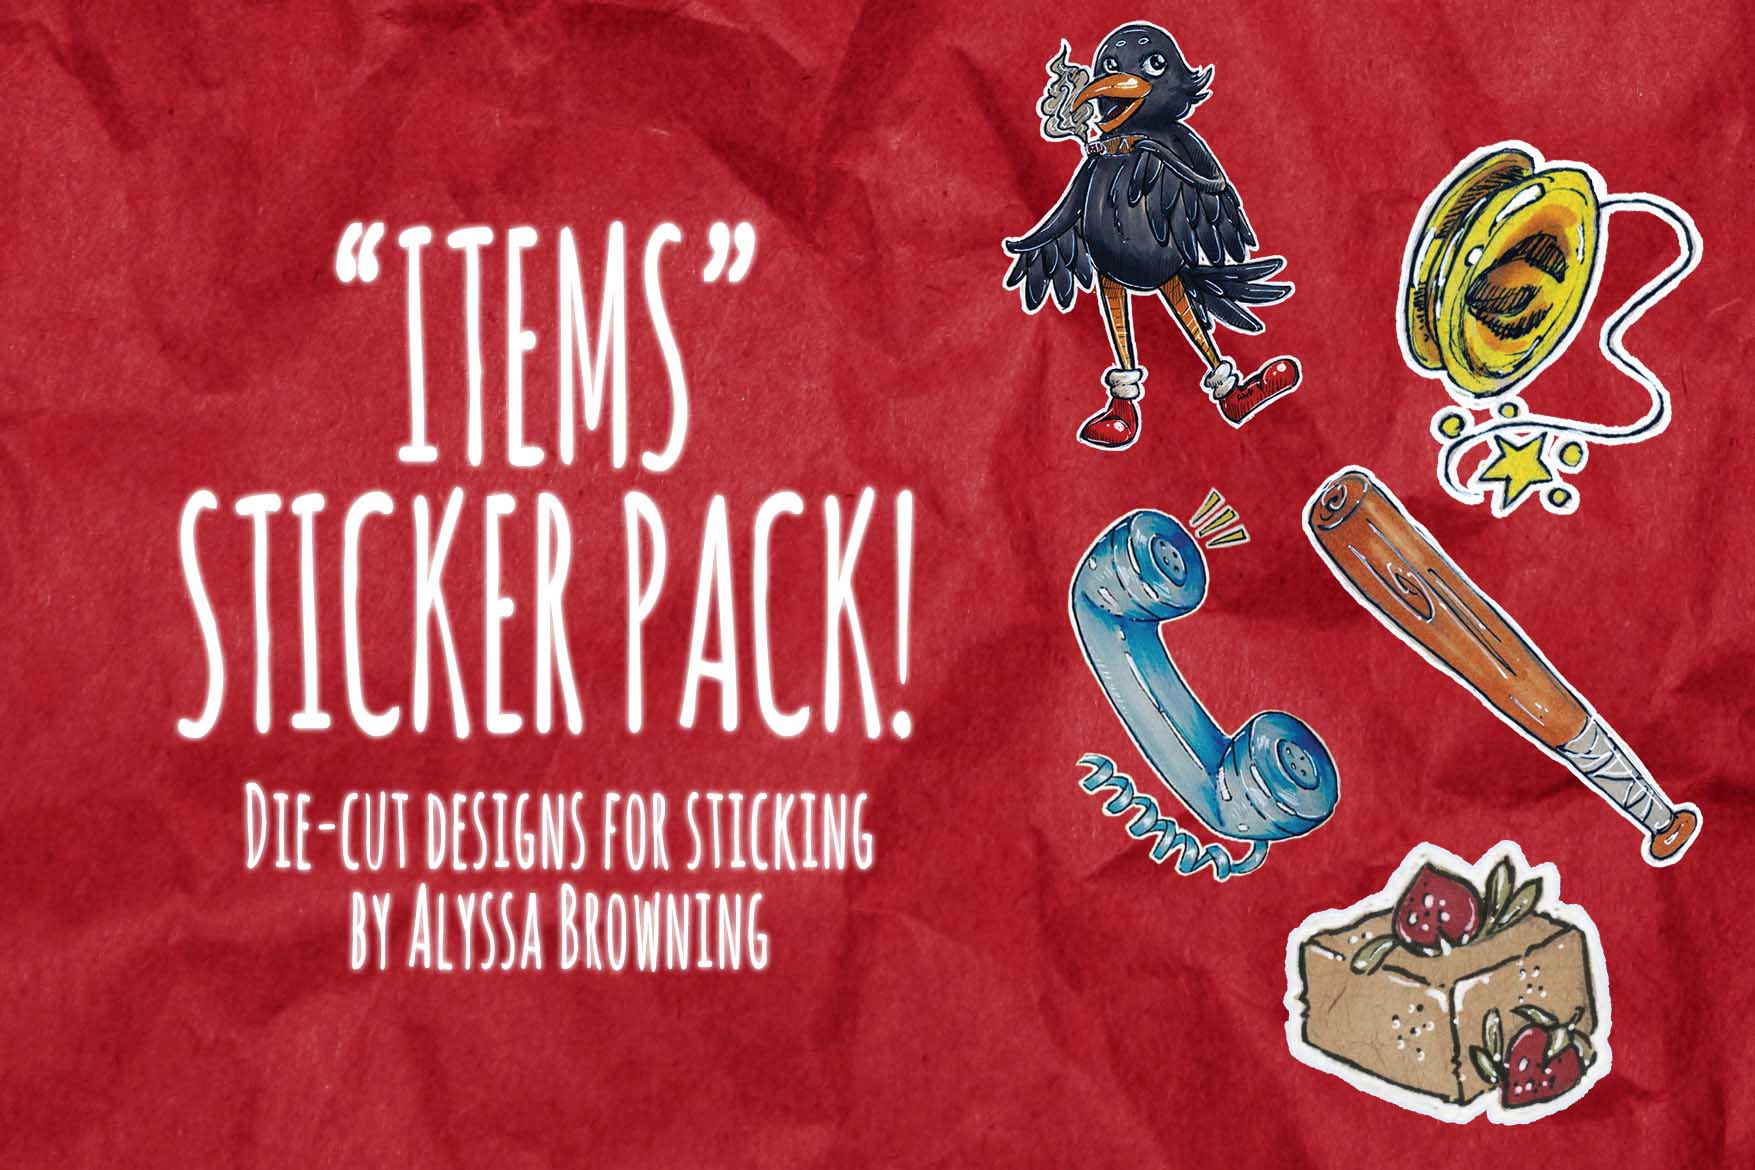 "Items" Sticker Pack